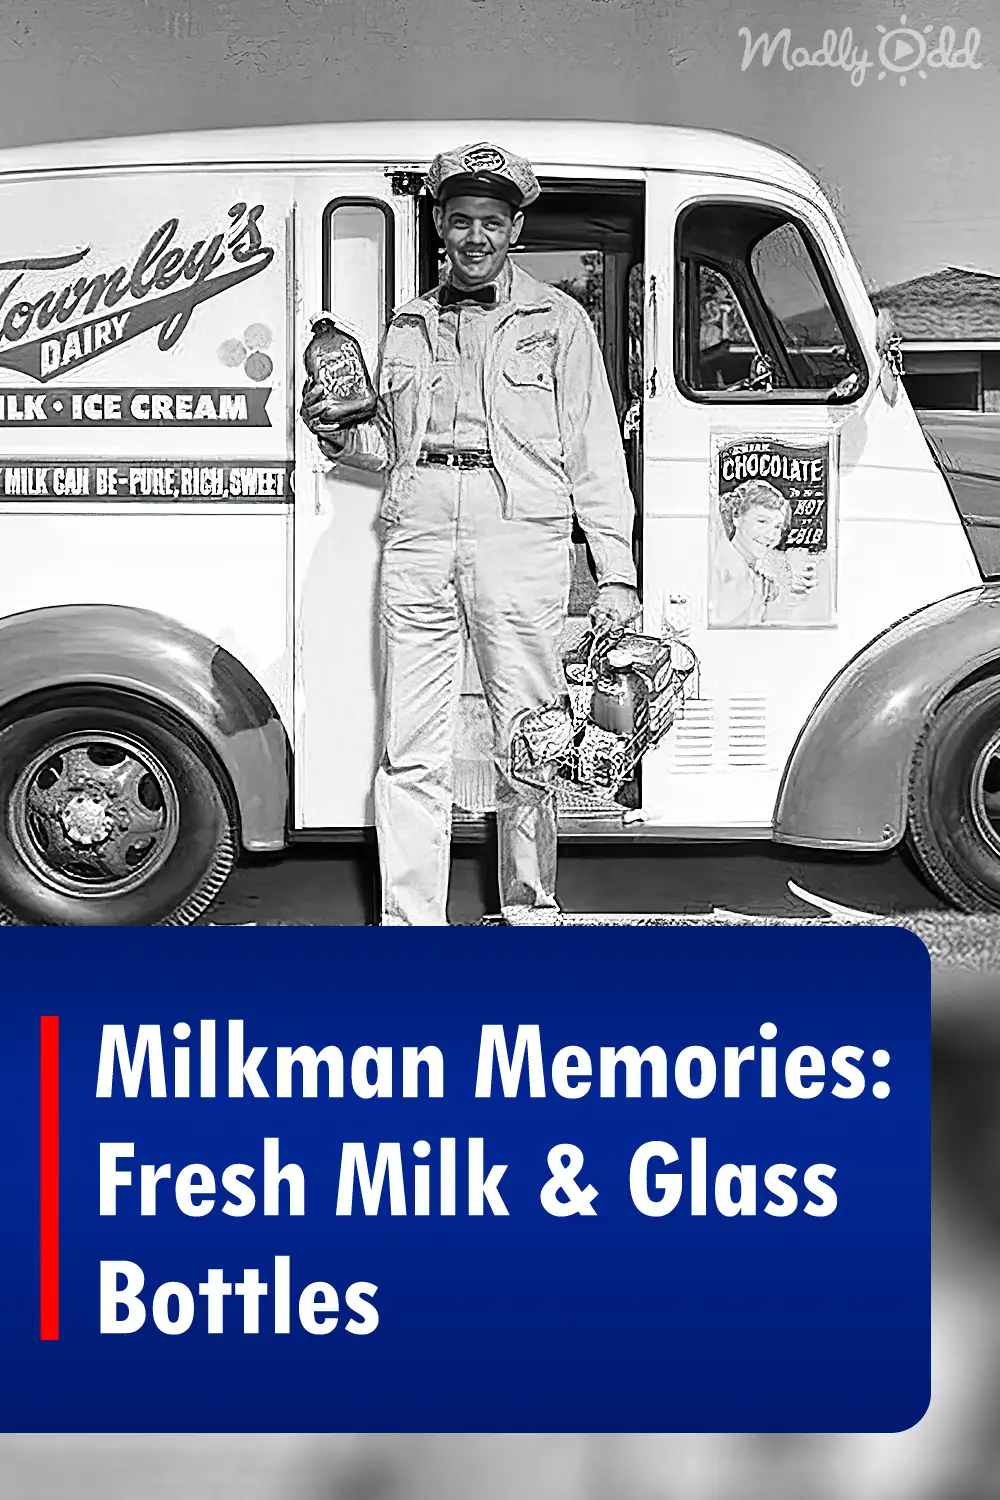 Milkman Memories: Fresh Milk & Glass Bottles